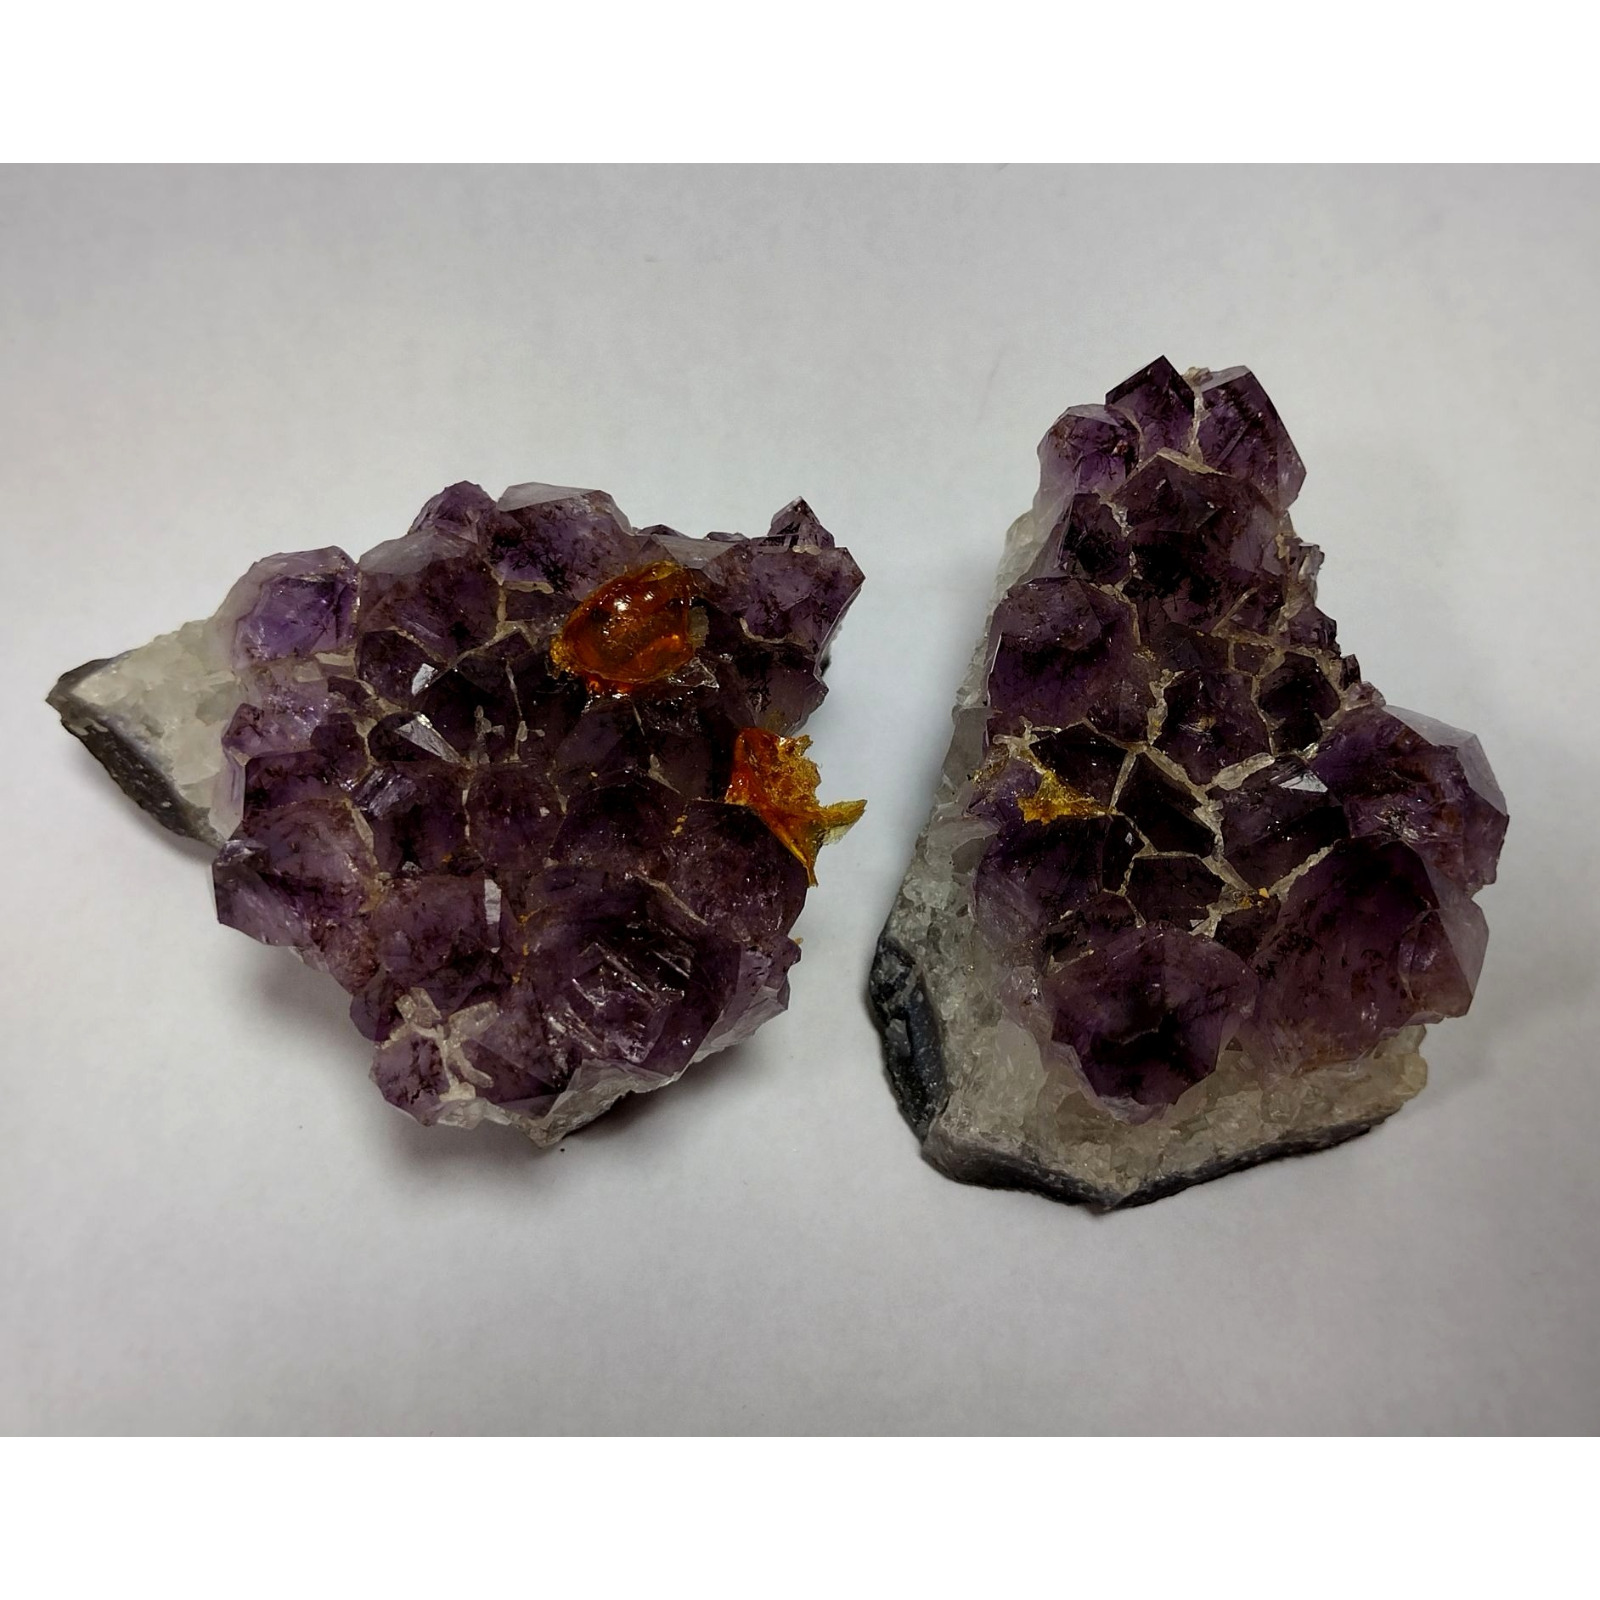 2 Natural Amethyst clusters rocks crystals Purple mineral quartz 10 oz weight